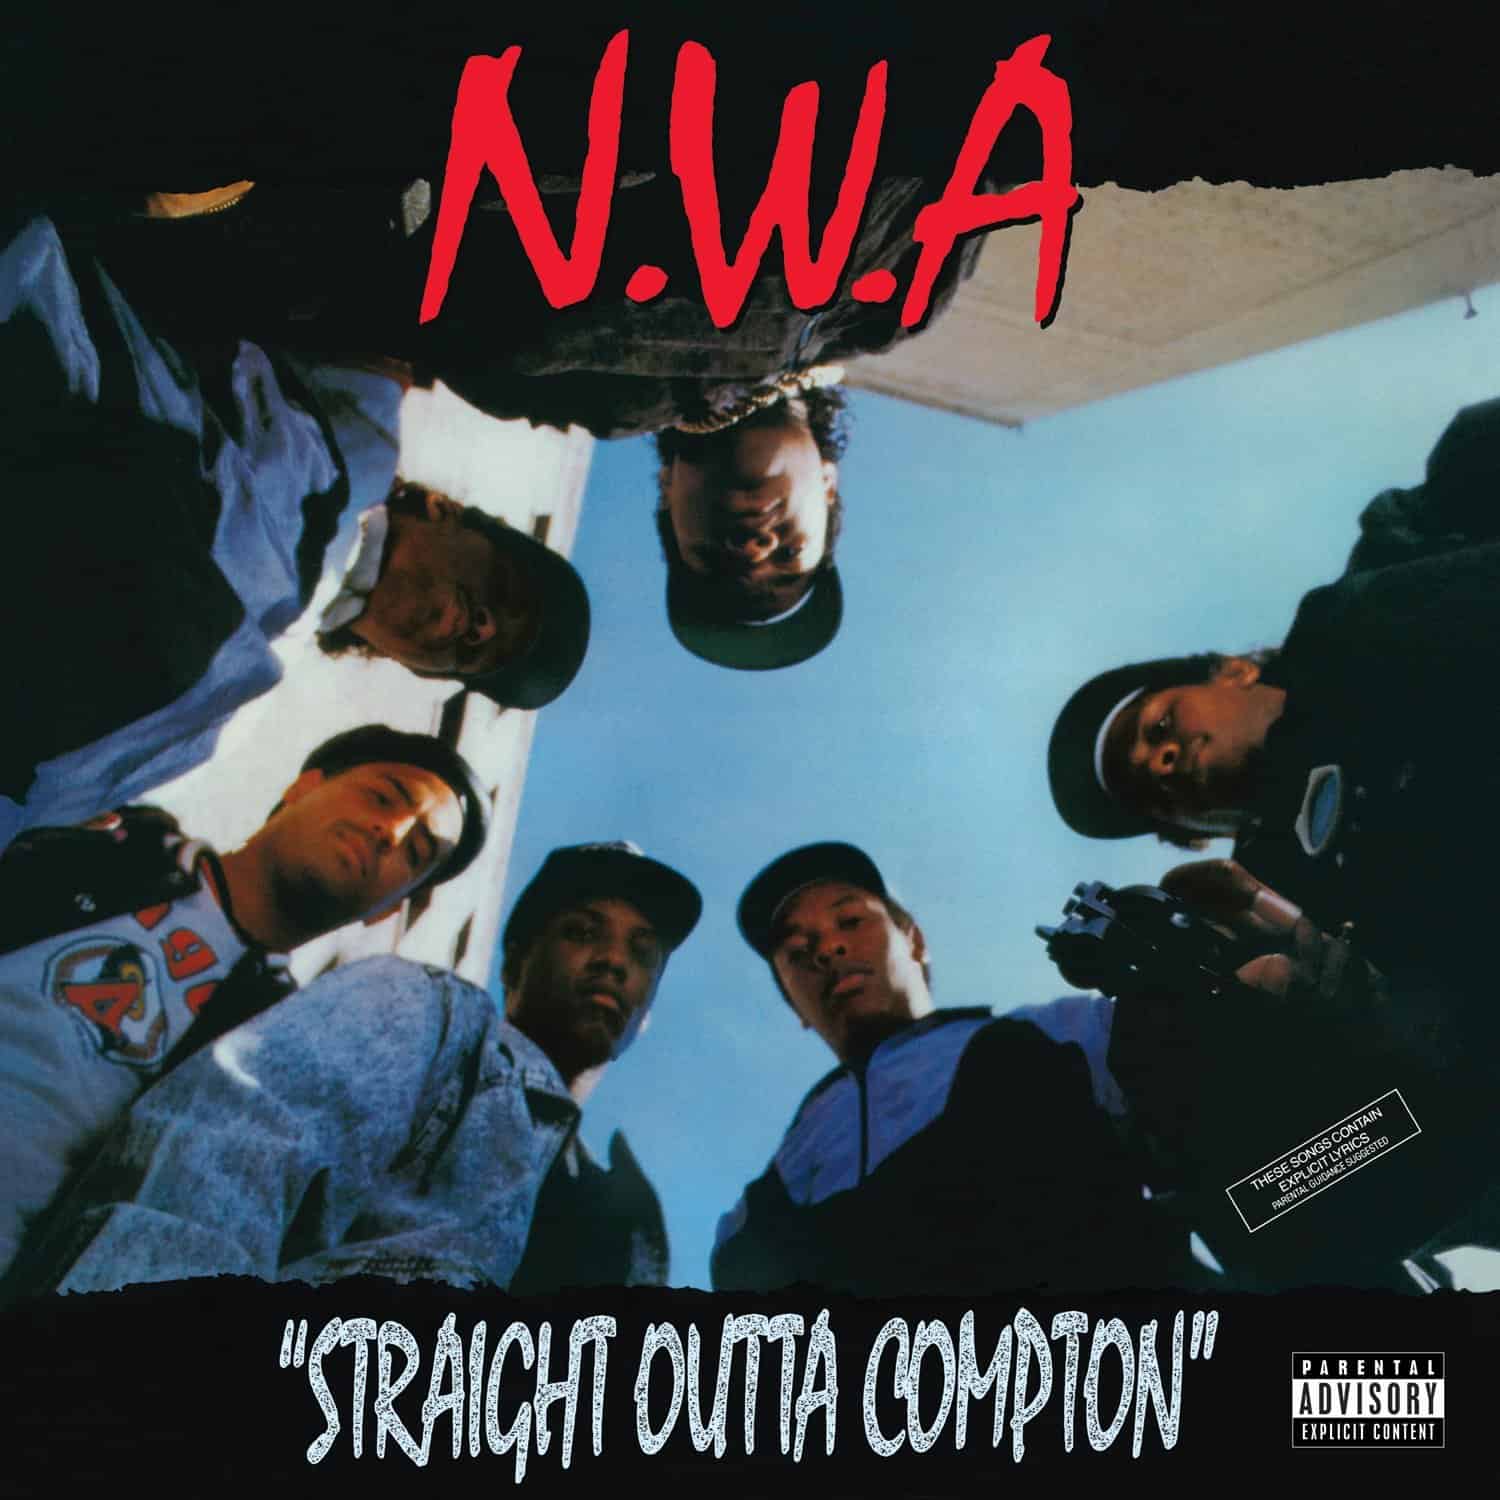 NWA-Straight-Outta-Compton-LP-vinyl-record-album-front